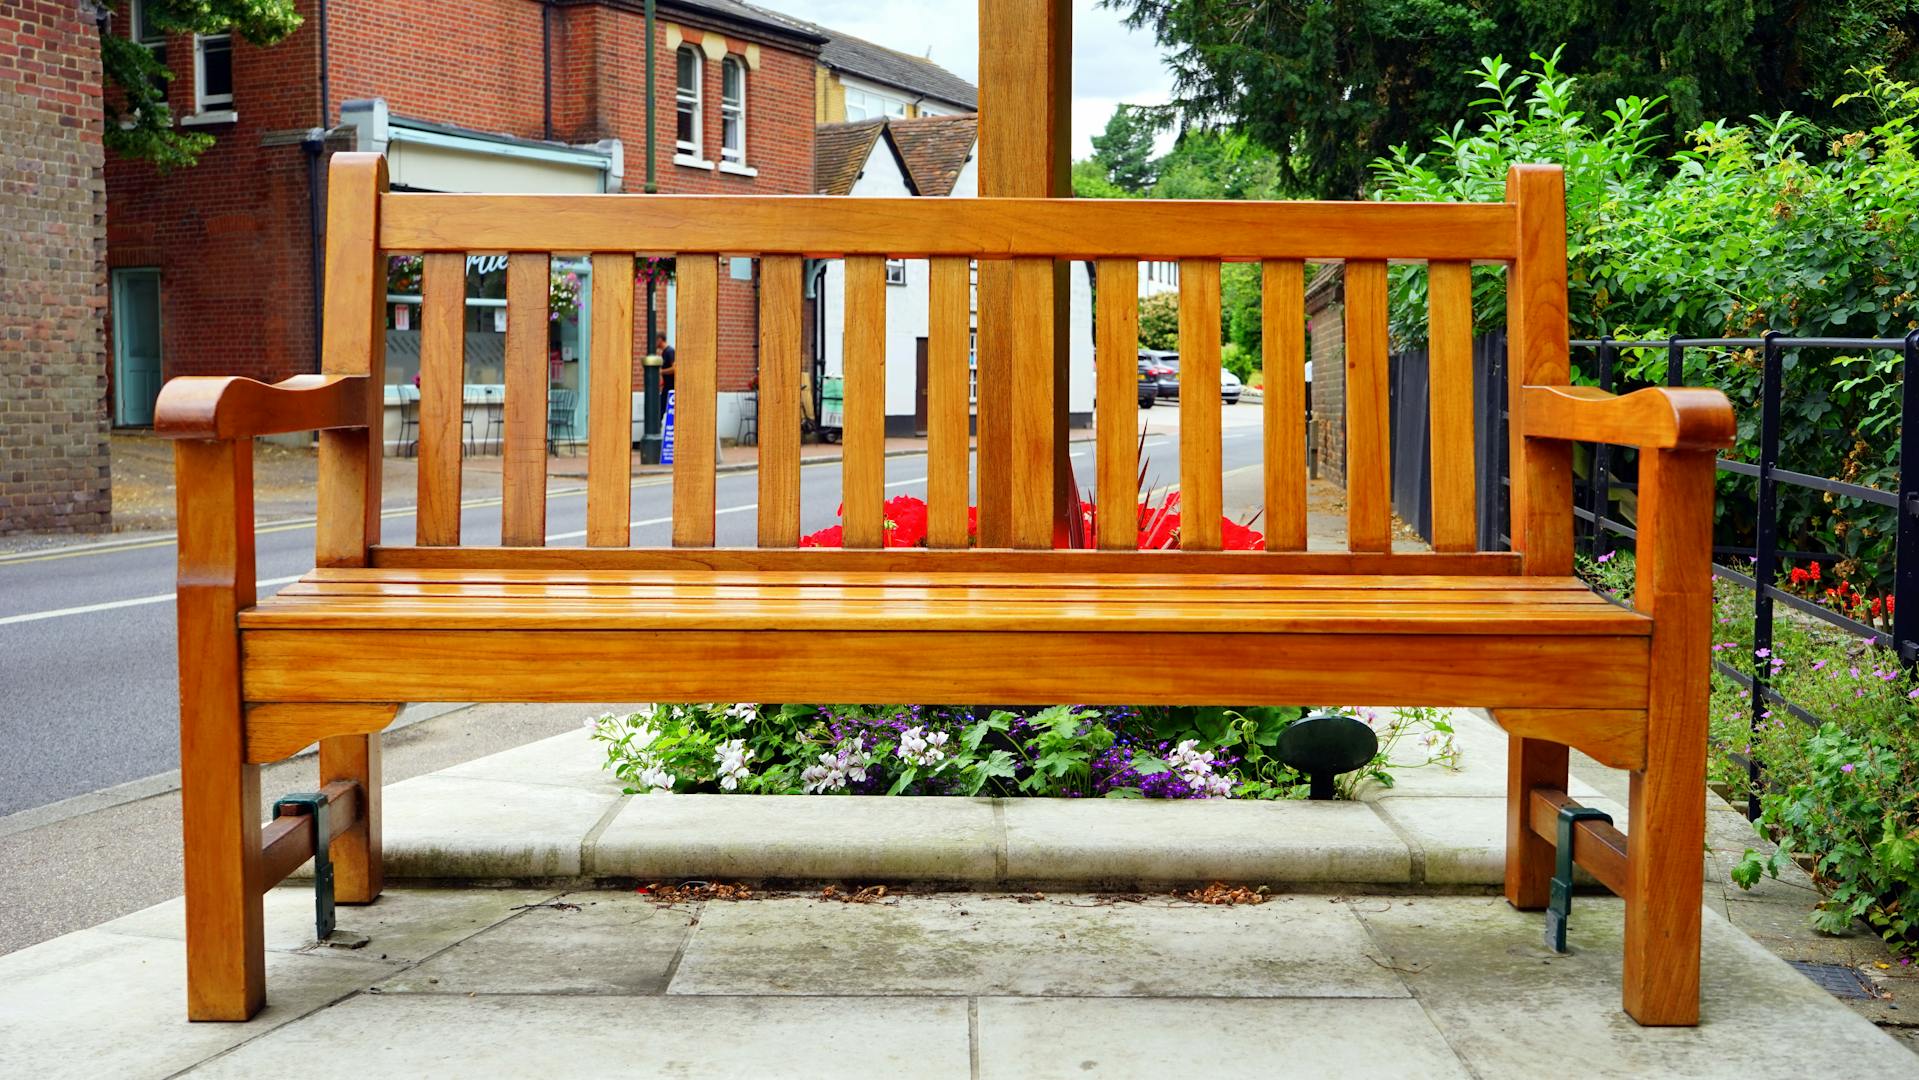 Empty bench on sidewalk | Source: Pexels